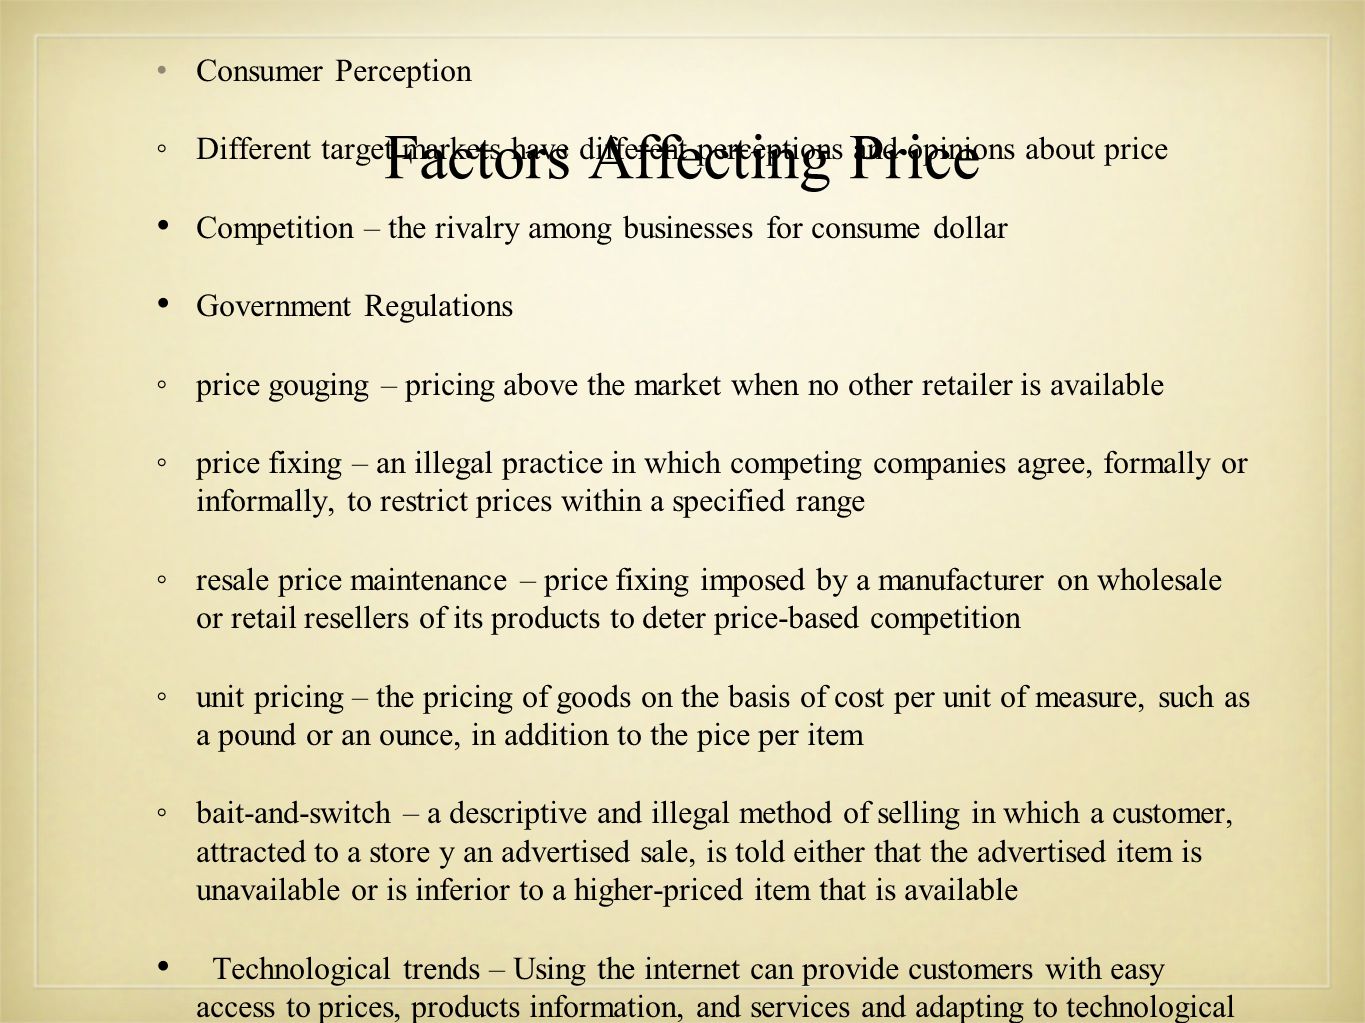 Factors Affecting Price